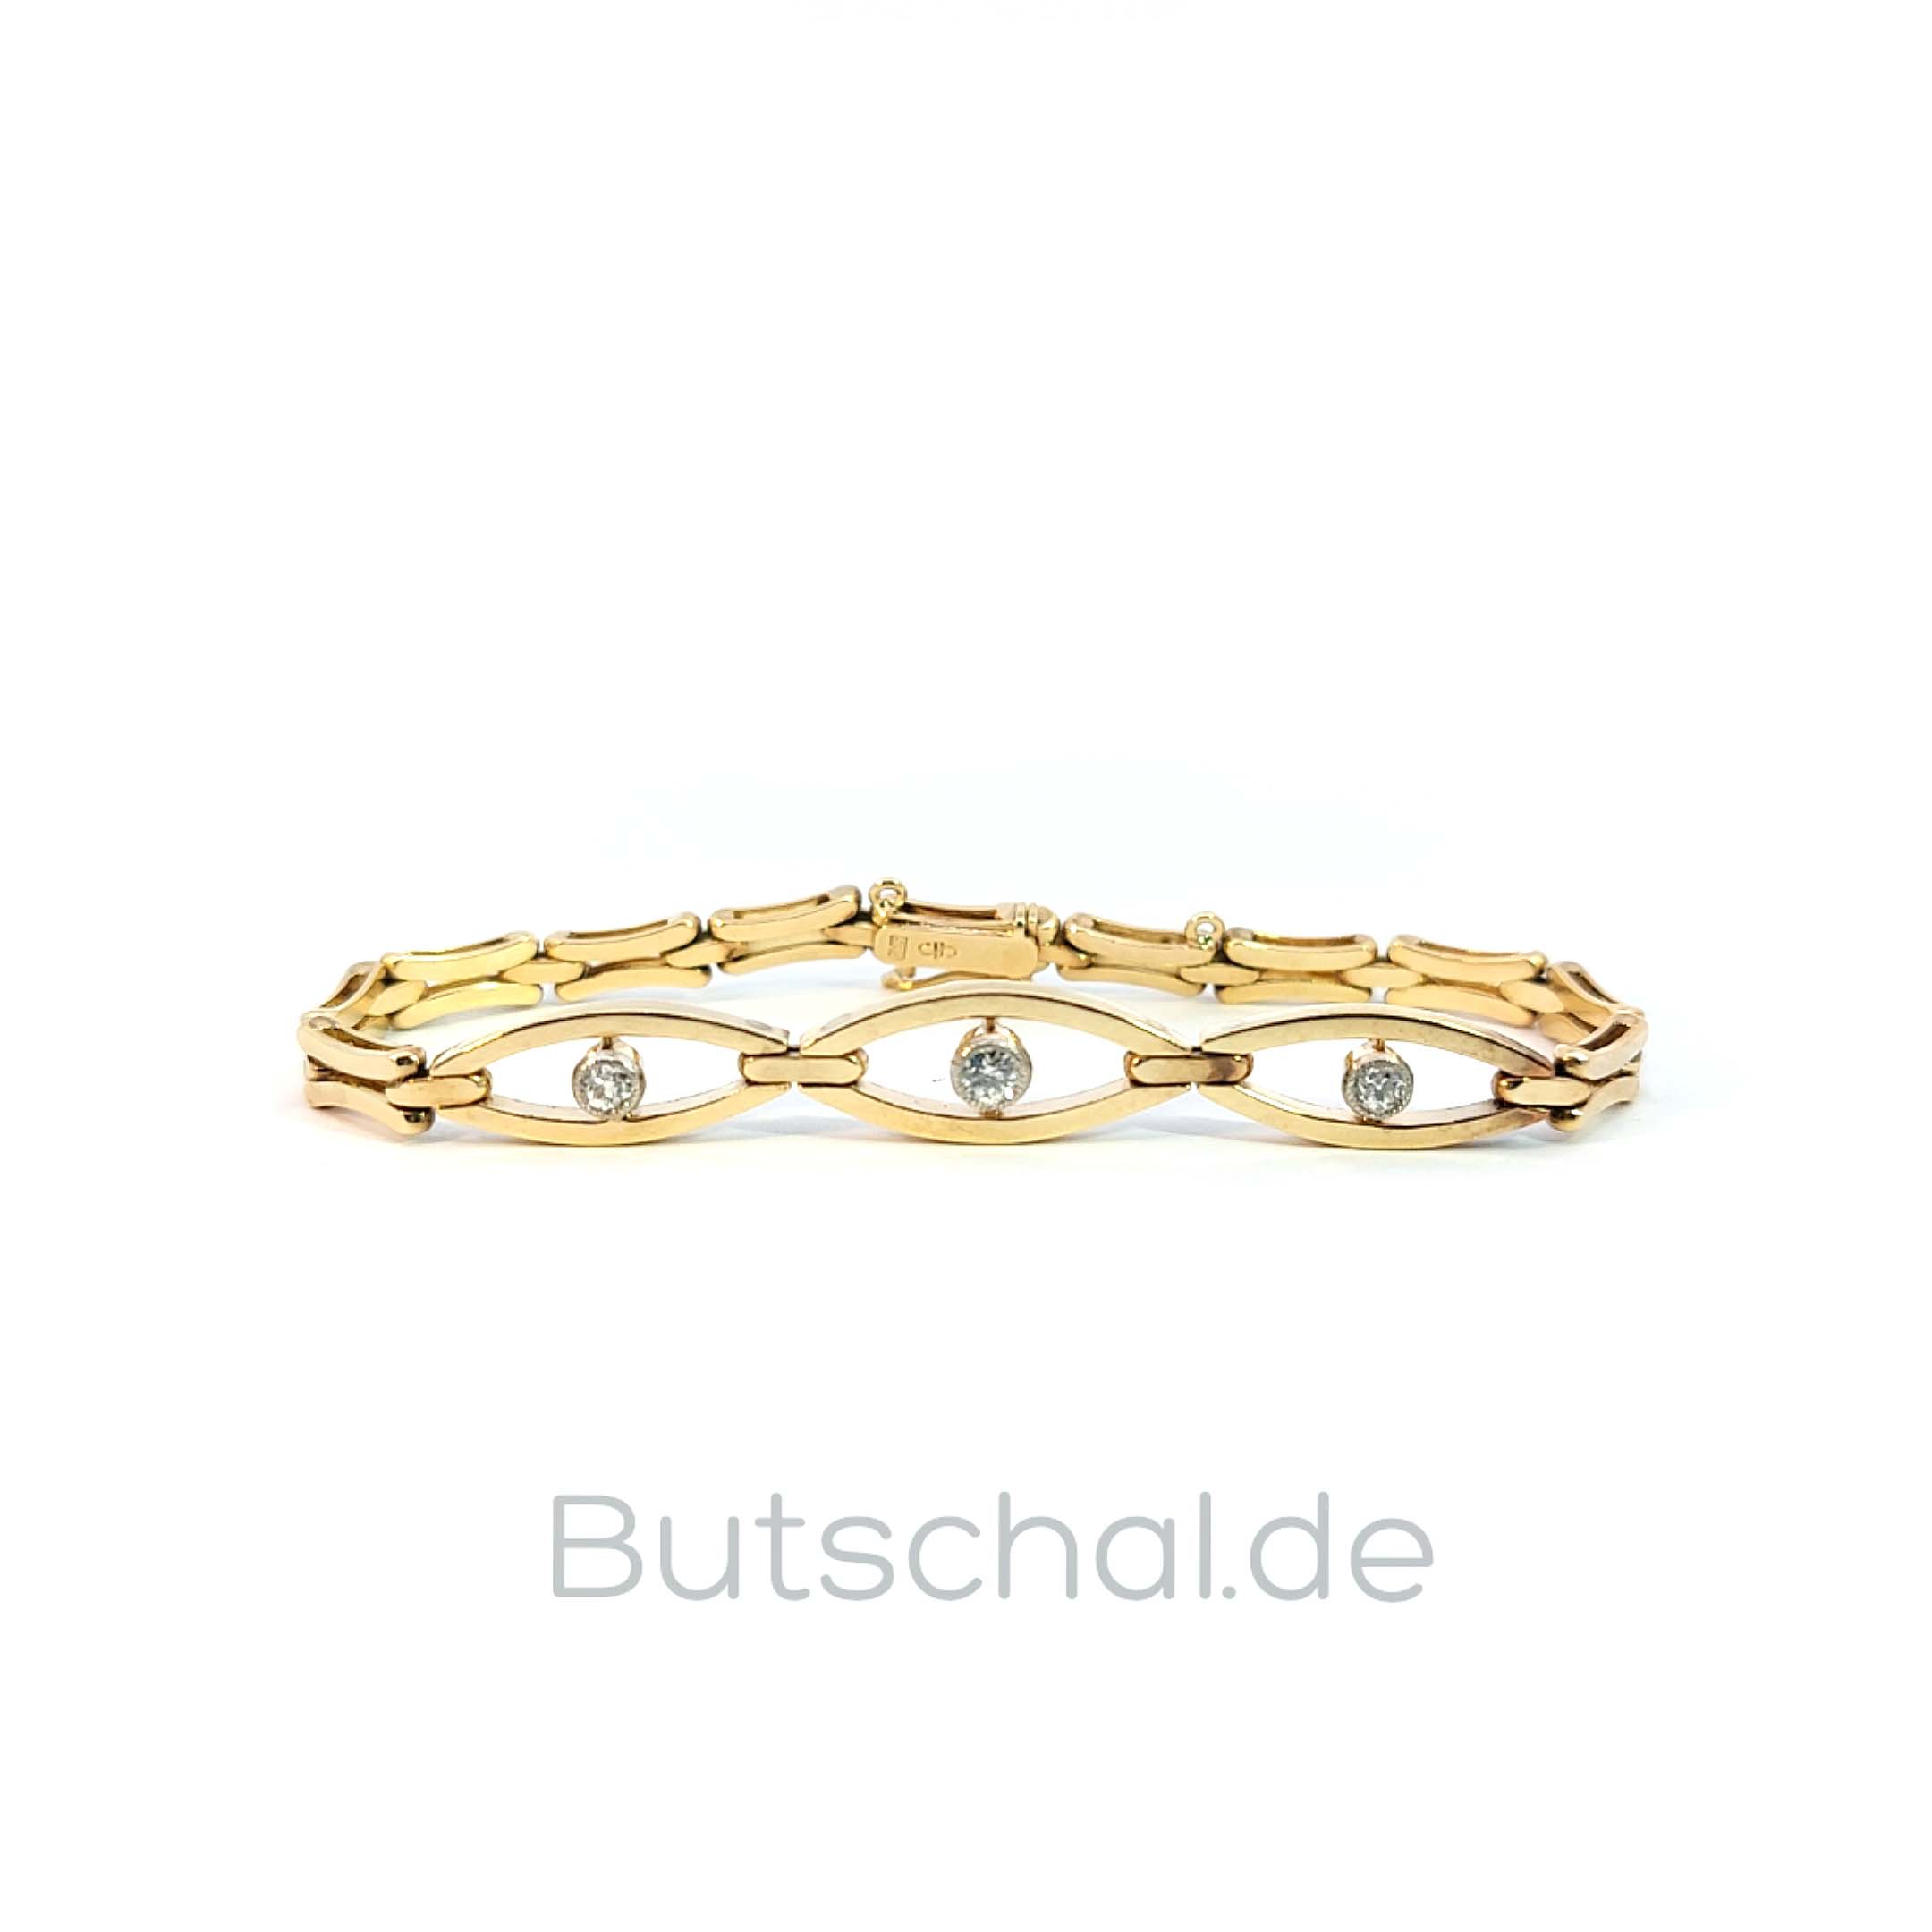 Goldschmuck, Armband in 585 Gold m passendem Halsband